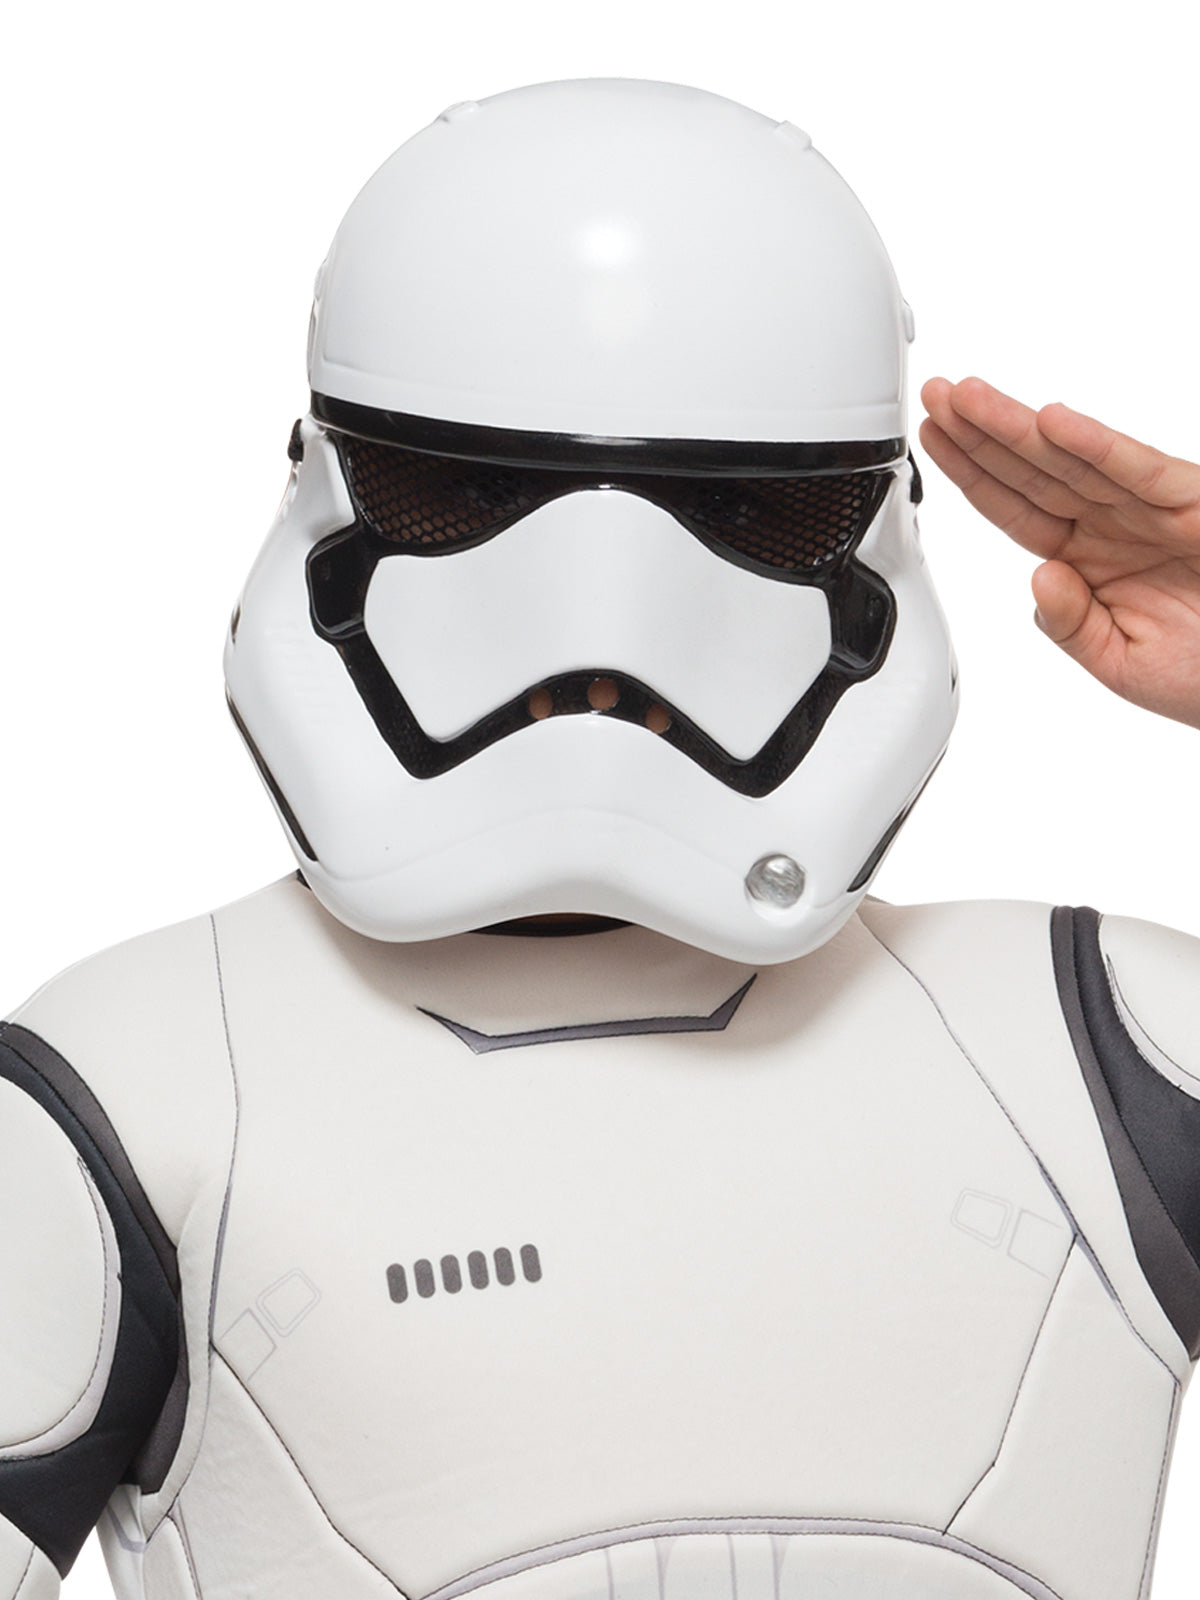 Star Wars Stormtrooper Deluxe Child Costume Licensed